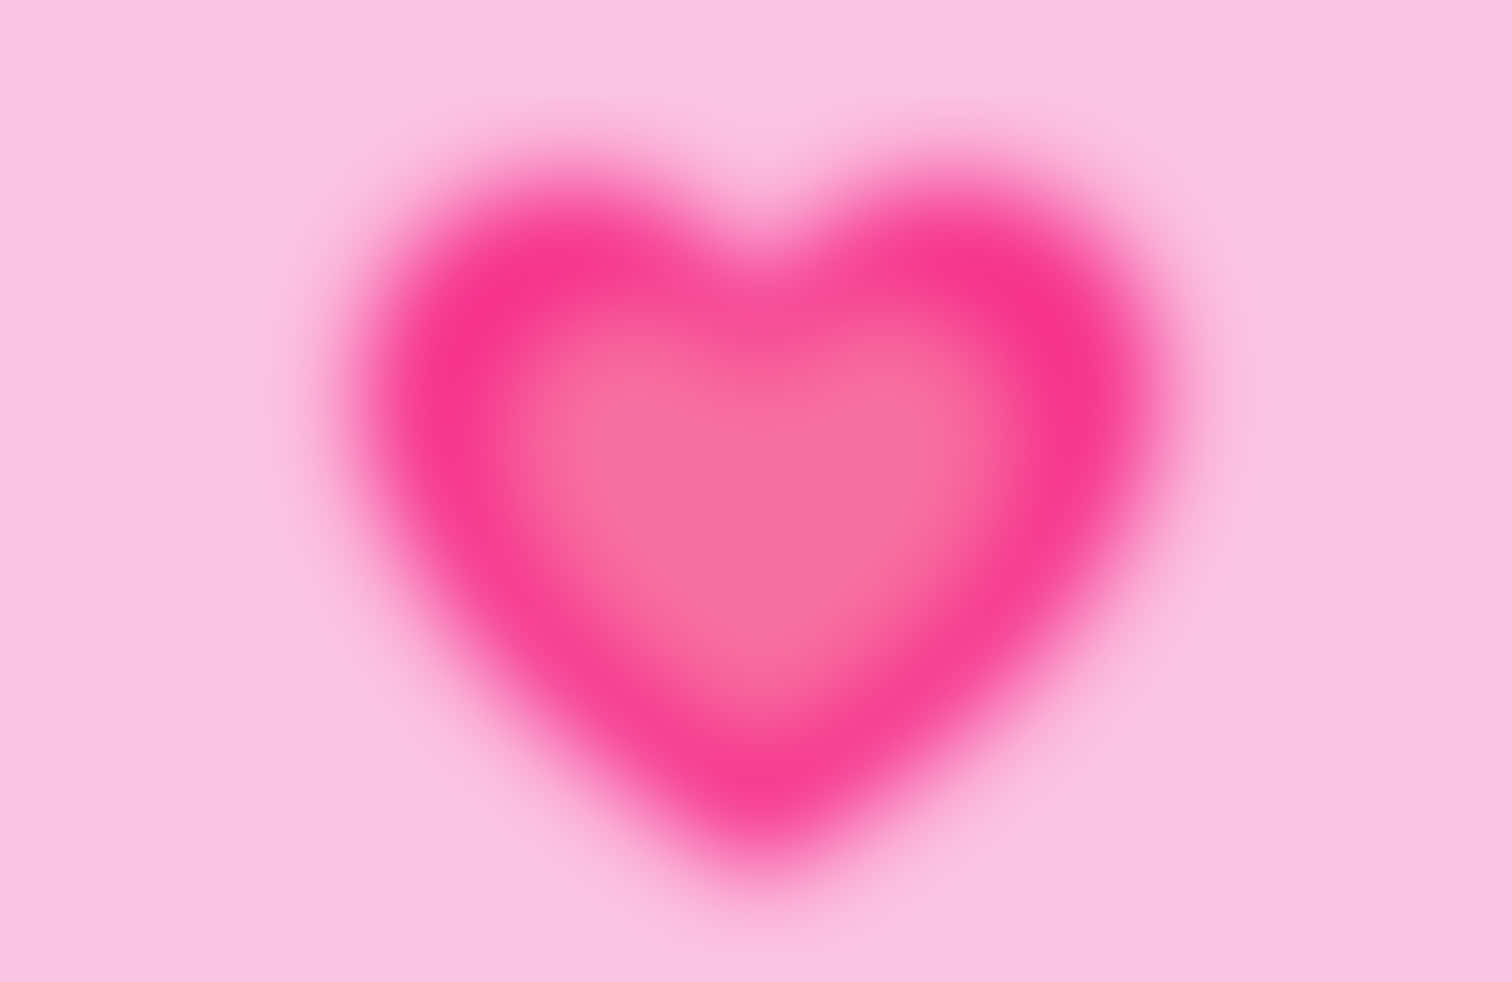 Blurred Pink Heart Aesthetic.jpg Wallpaper